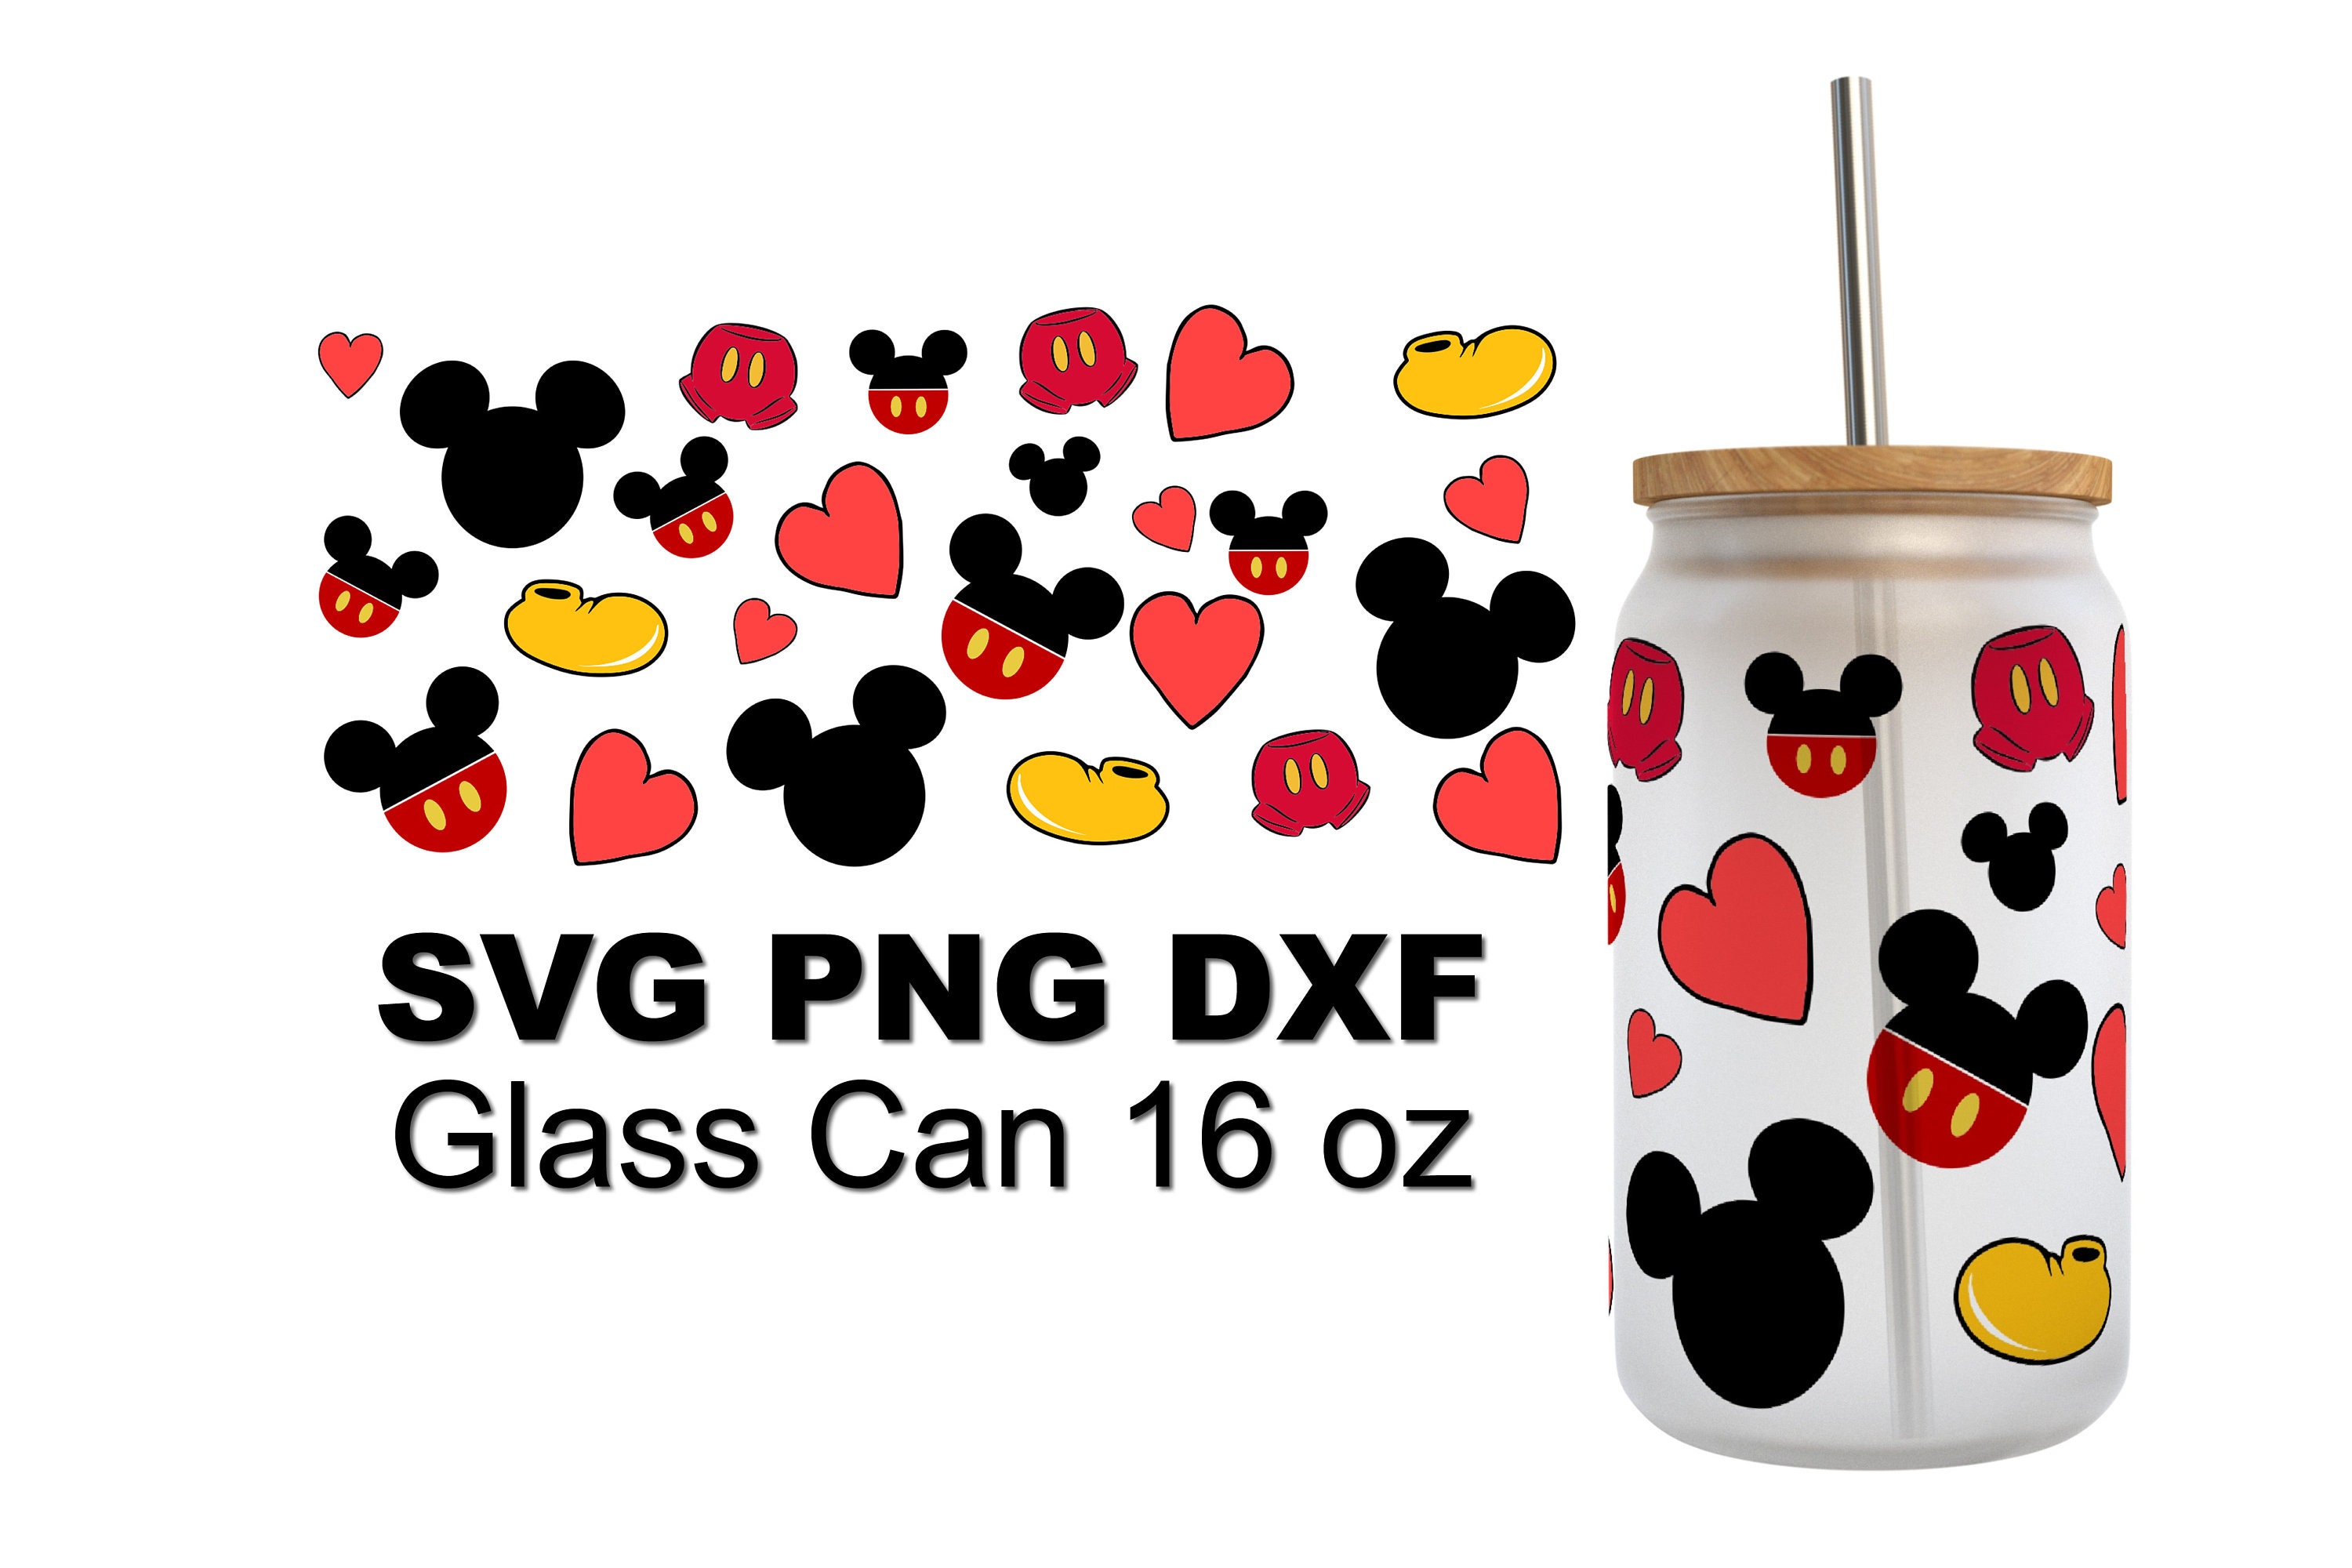 Mickey Minnie Libbey Glass SVG (FSD-P5) - Store Free SVG Download